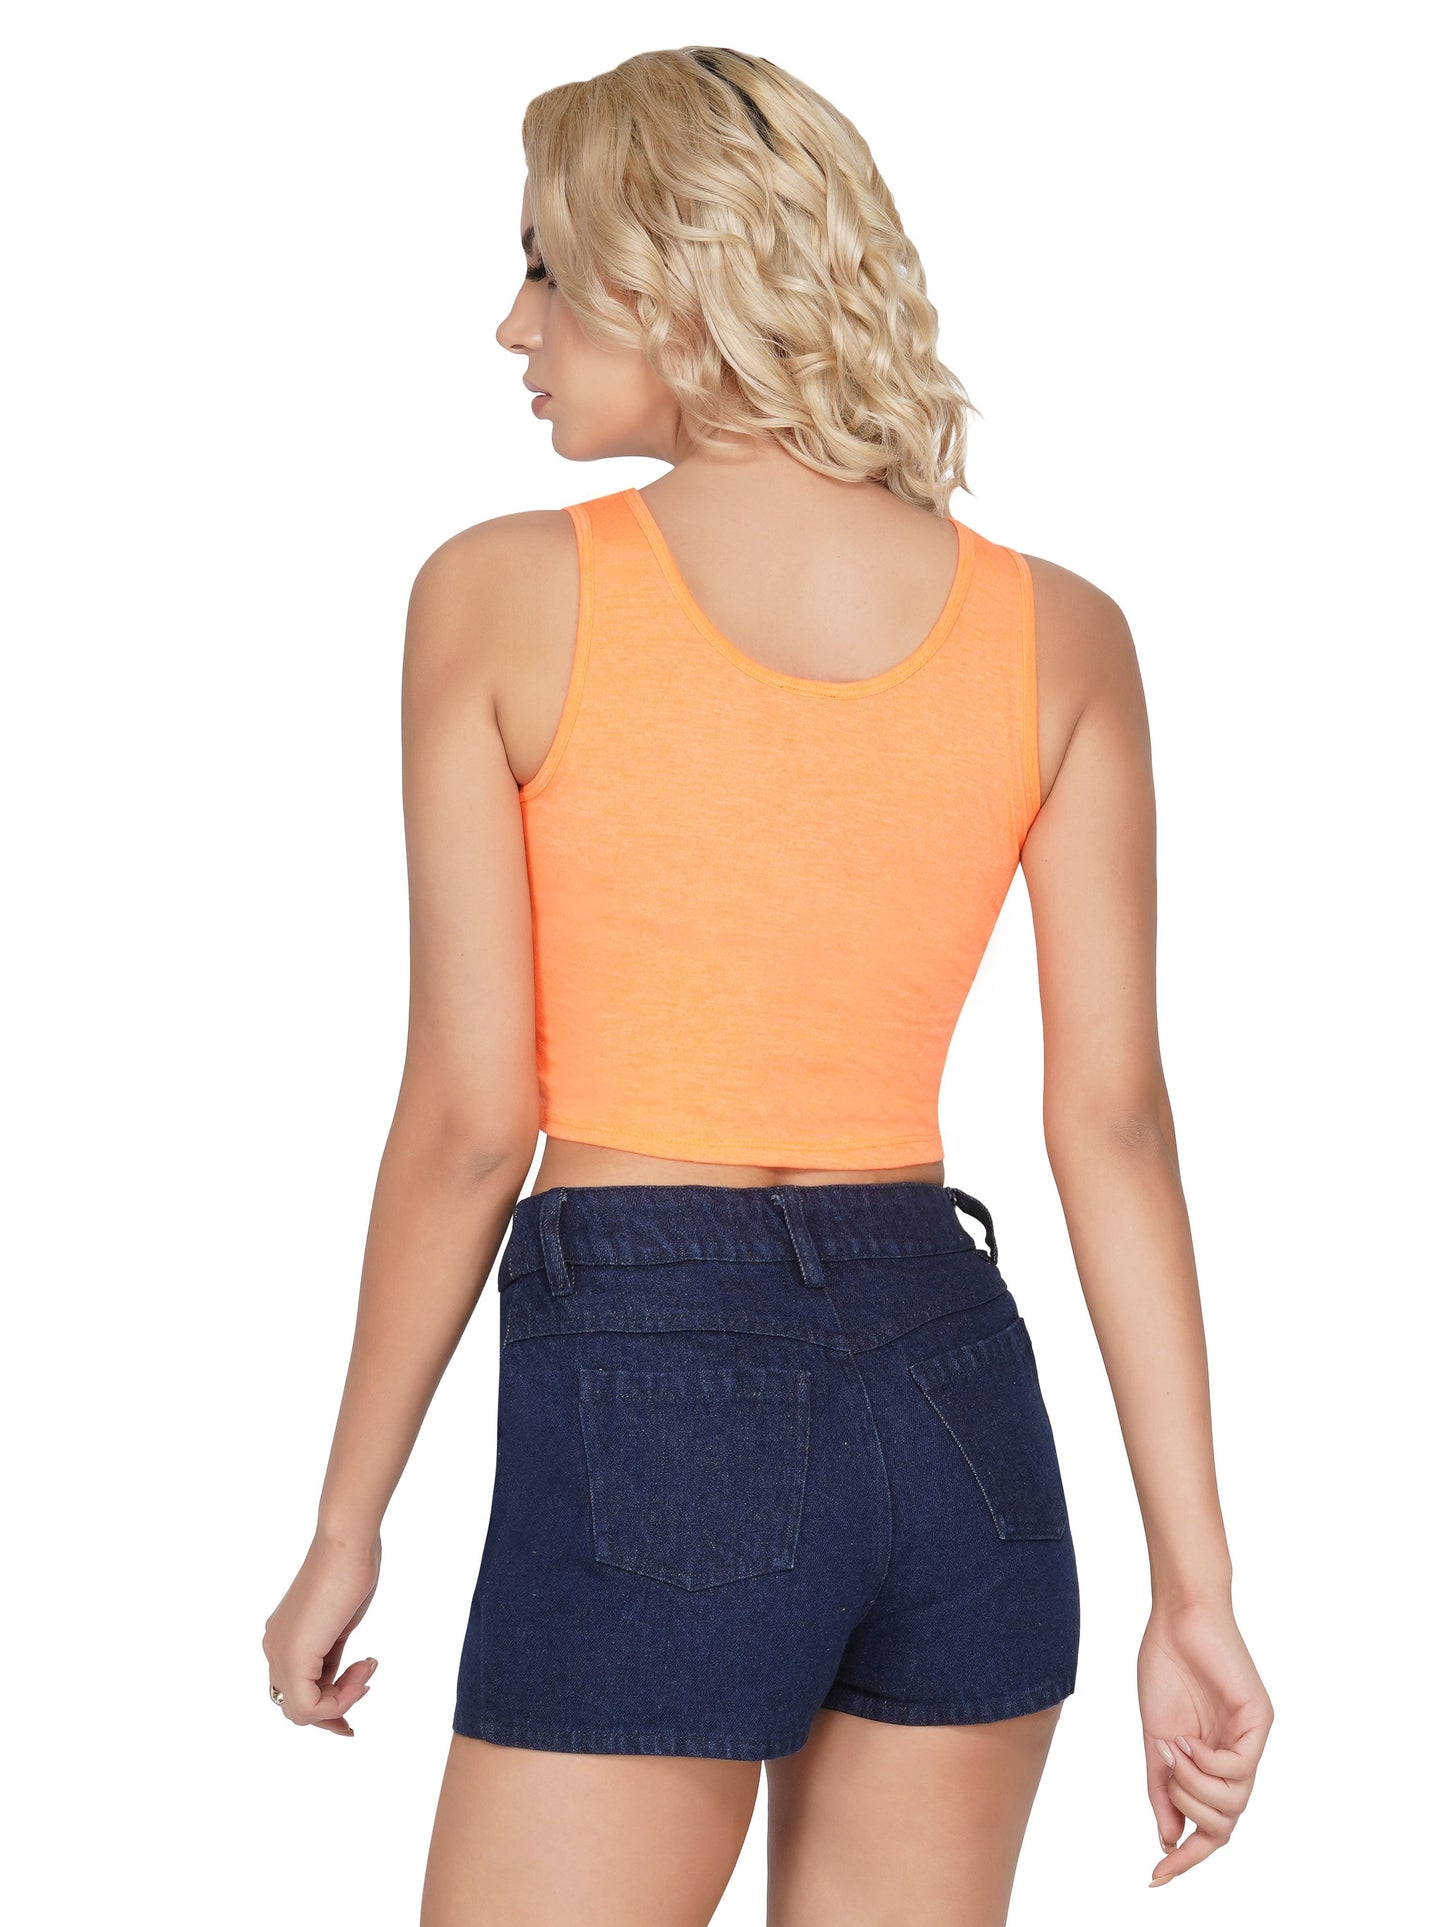 SLAY. Women's Neon Orange Printed Crop Top-clothing-to-slay.myshopify.com-Crop Top